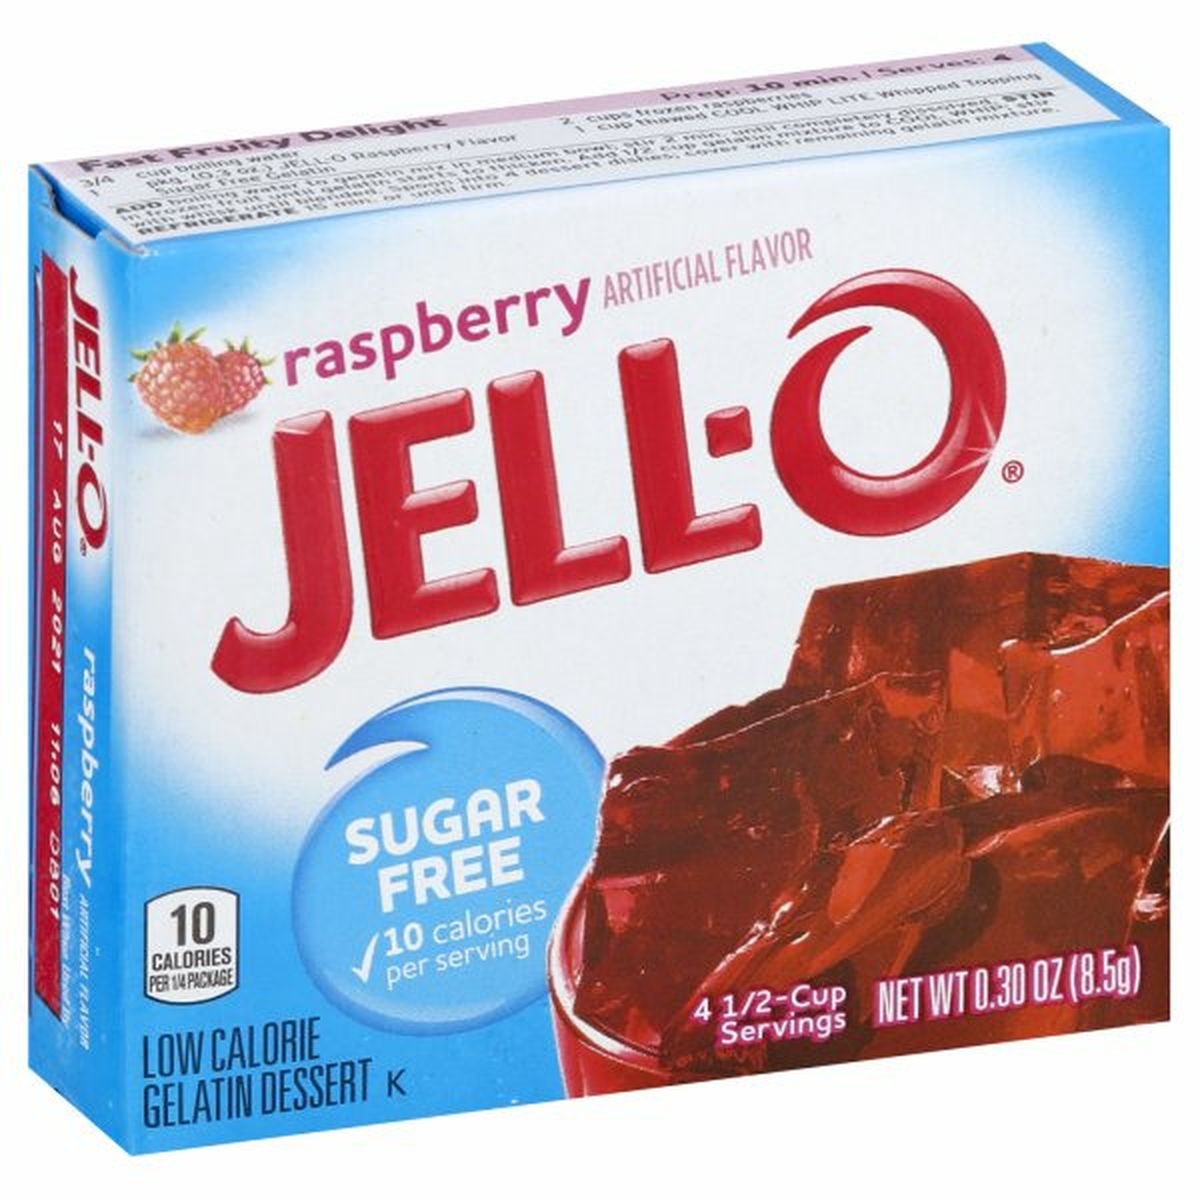 Calories in Jell-O Gelatin Dessert, Low Calorie, Sugar Free, Raspberry